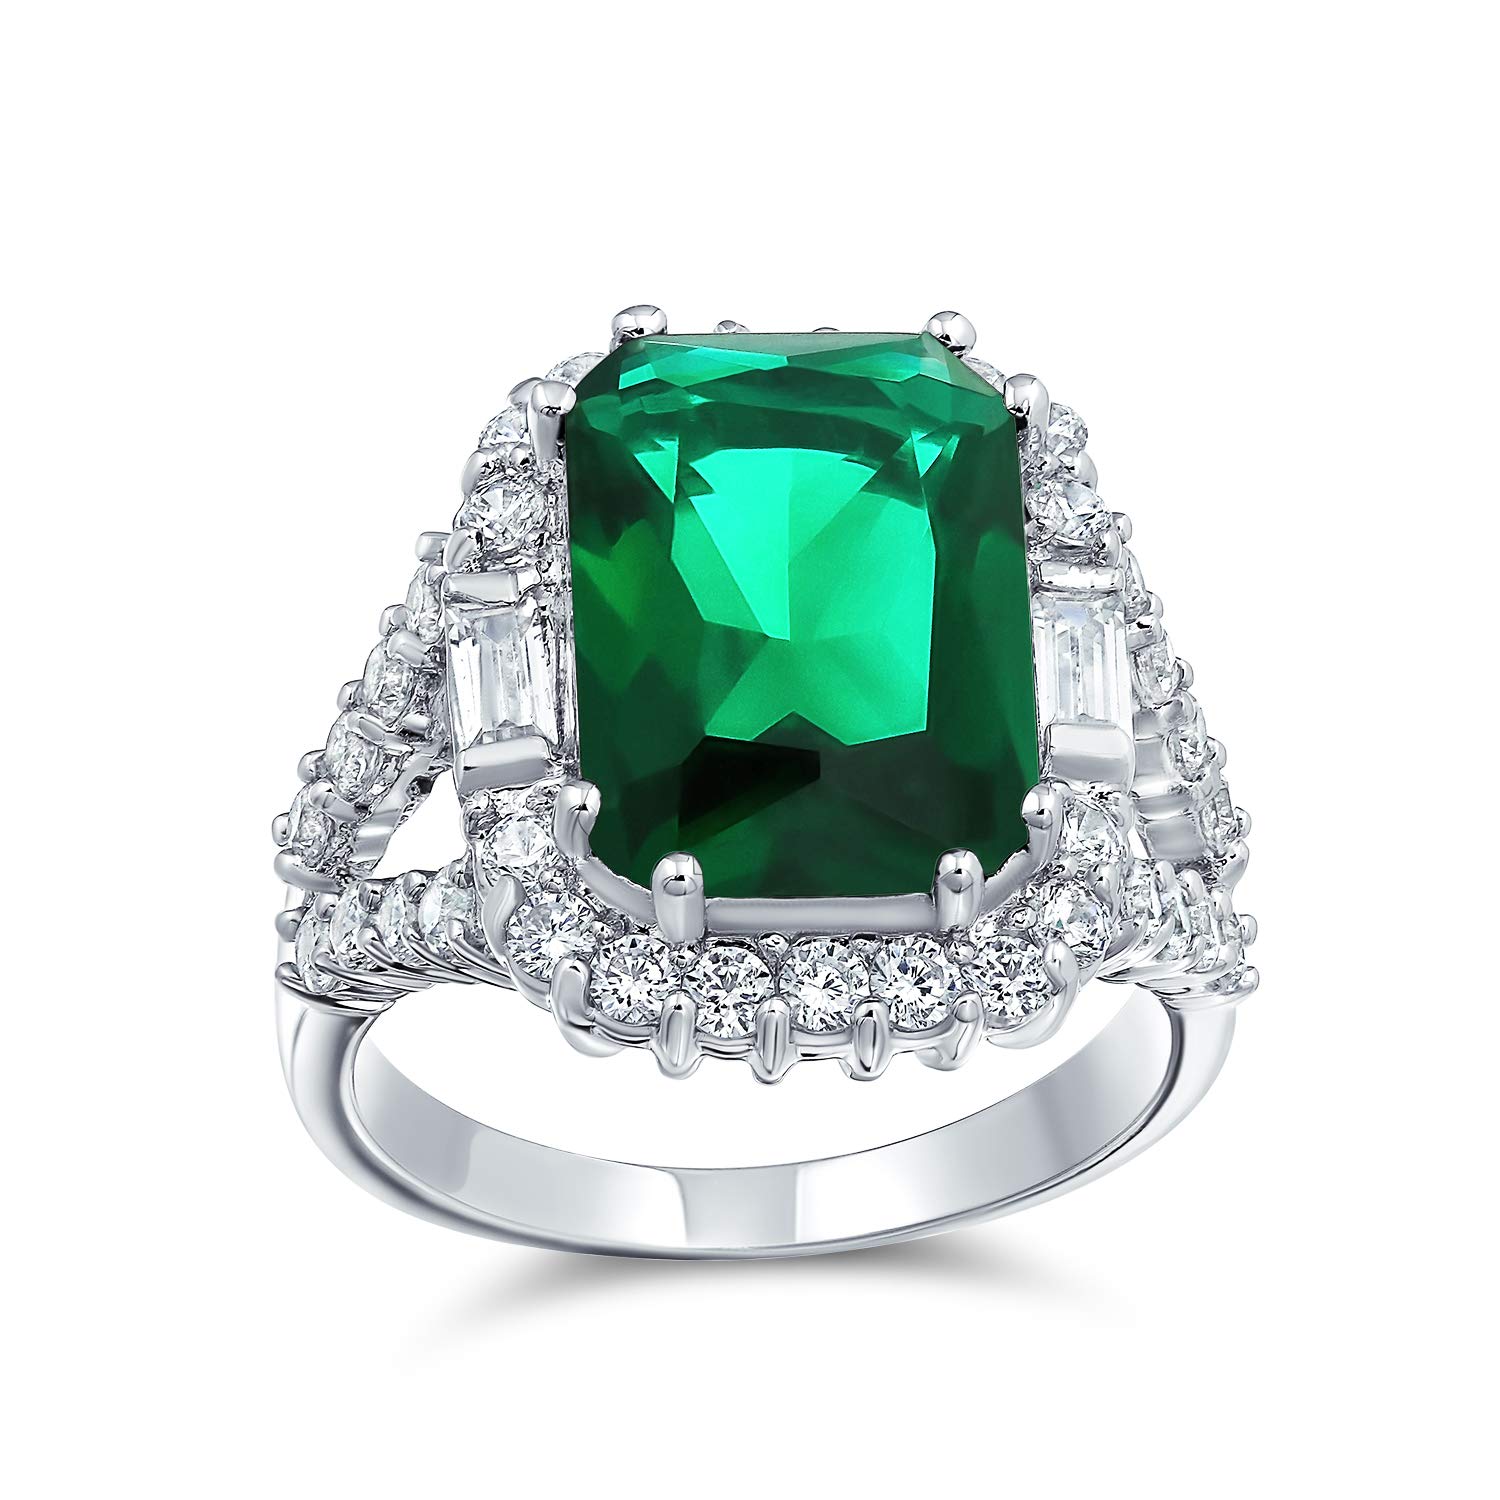 Bling Jewelry 7Ct Cubic Zirkonia Cz Pave Rechteck Grün Simuliert Emerald Cut Statement Fashion Ring Für Frauen Silber Plattiert Messing